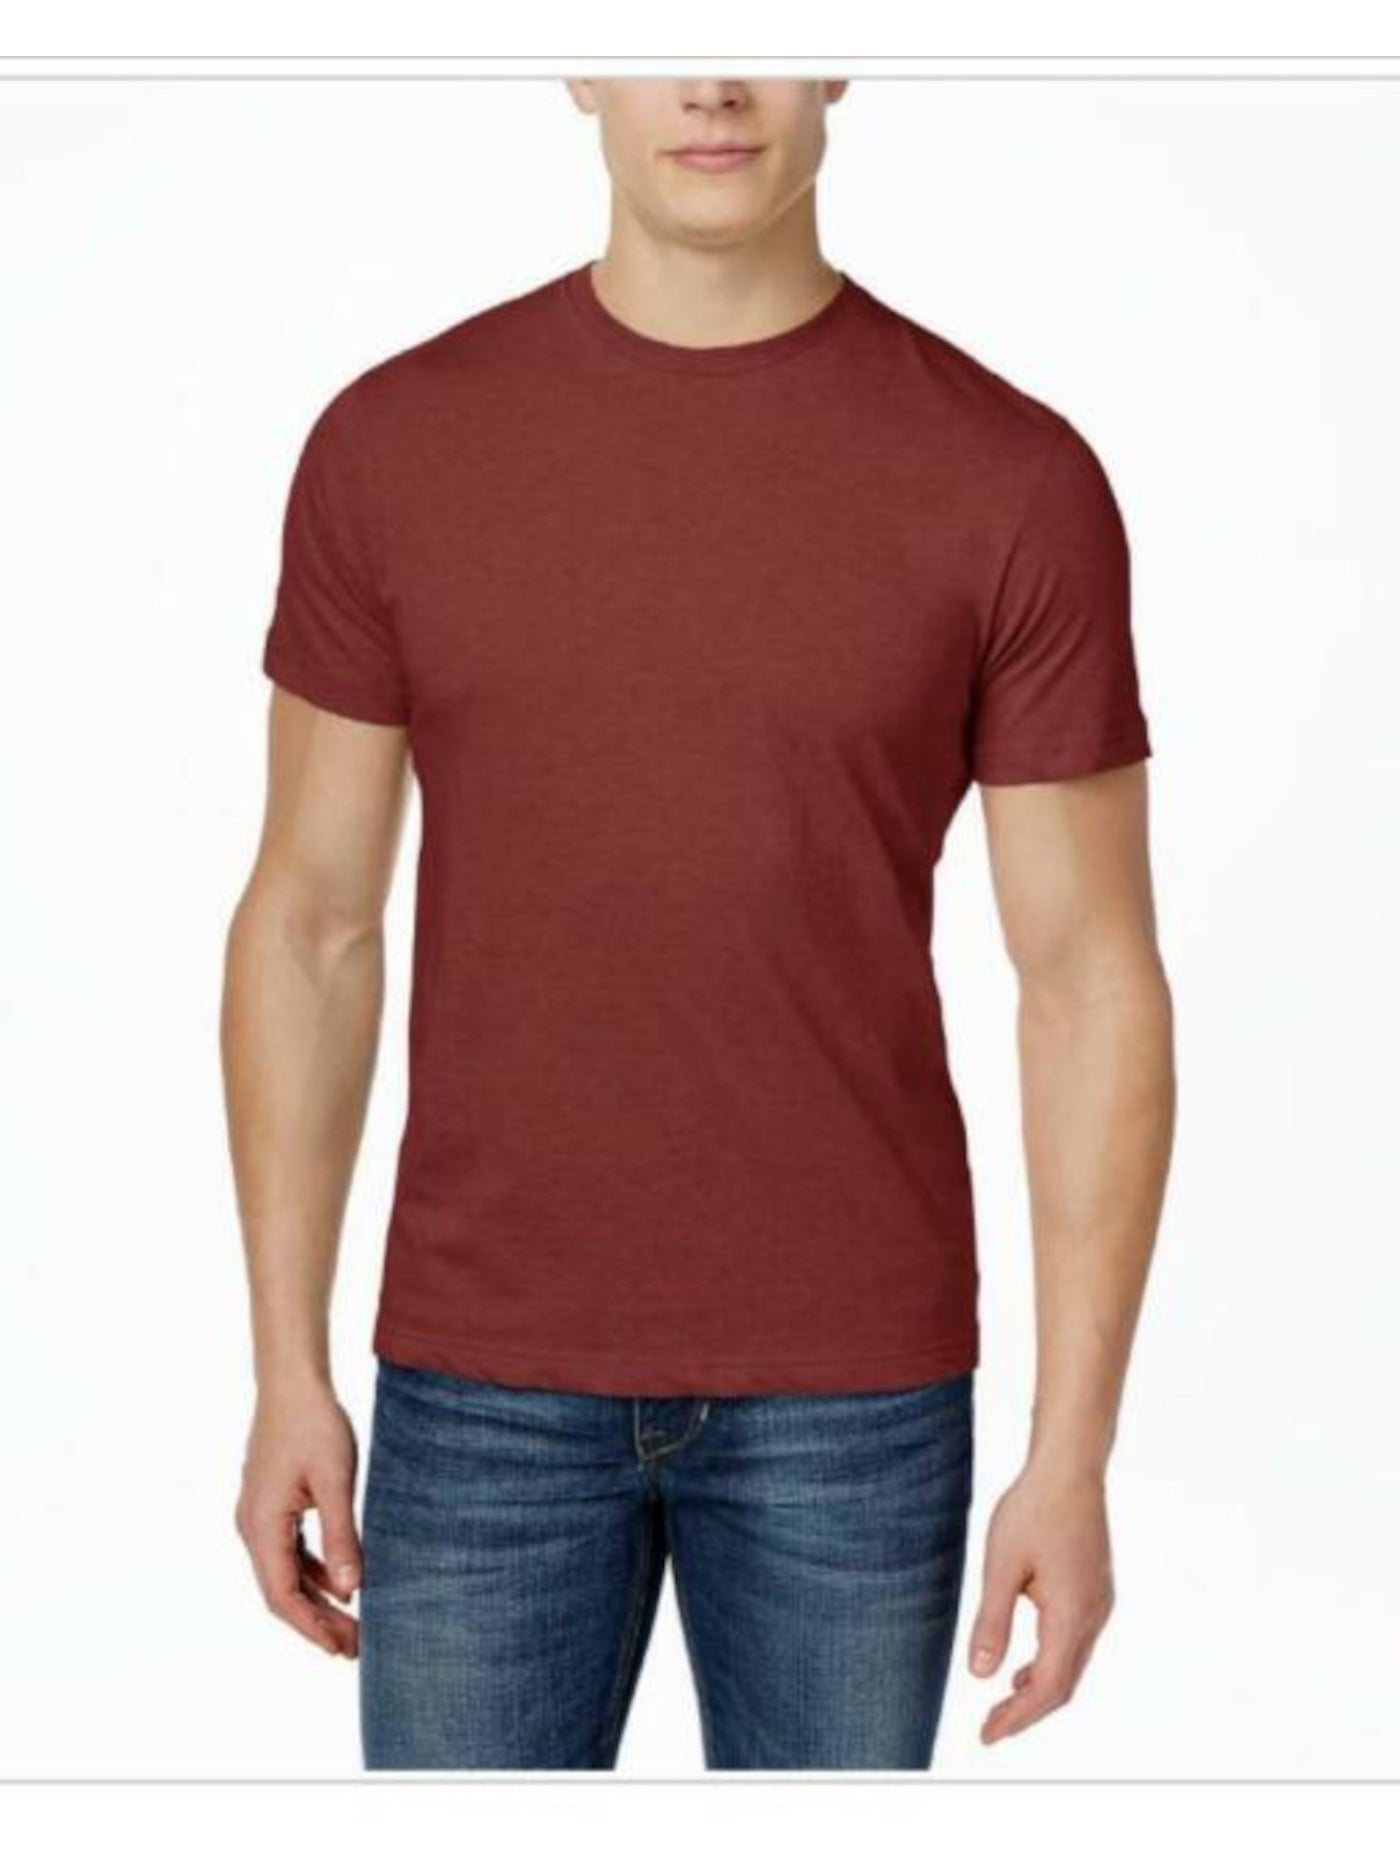 ALFANI Mens Red Heather Short Sleeve T-Shirt S